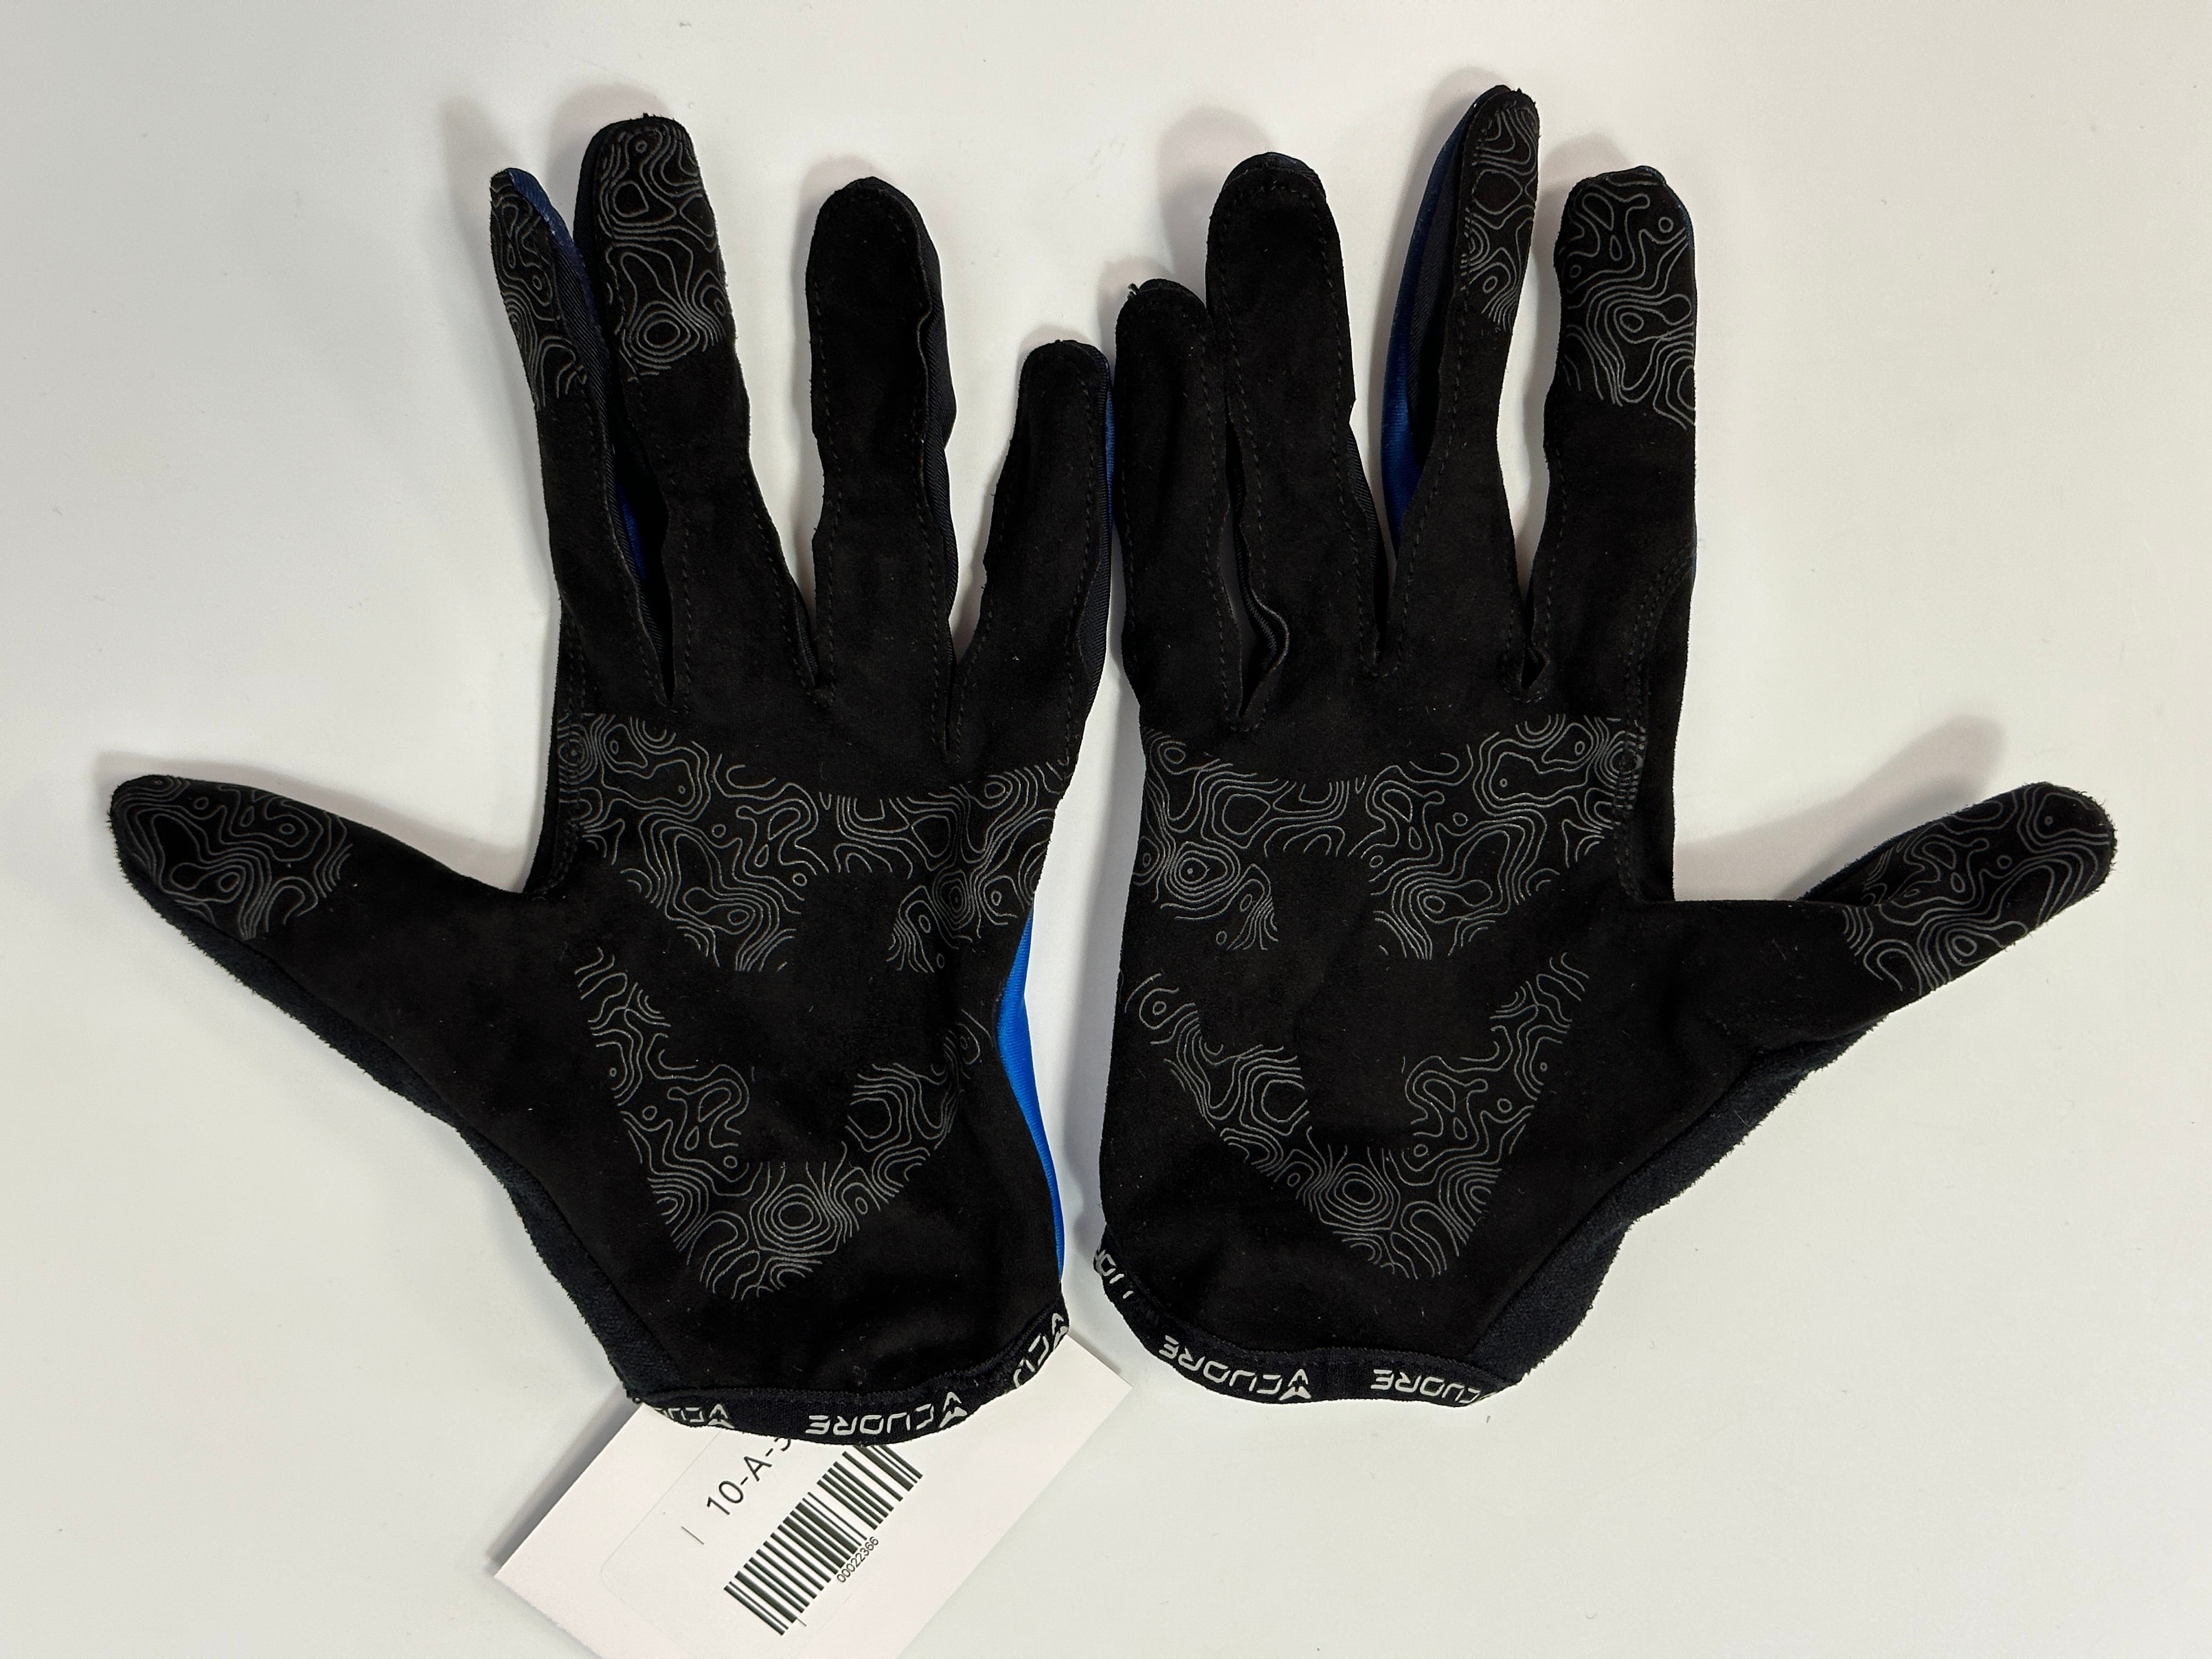 Ceratizit WNT Long Finger Gloves by Cuore